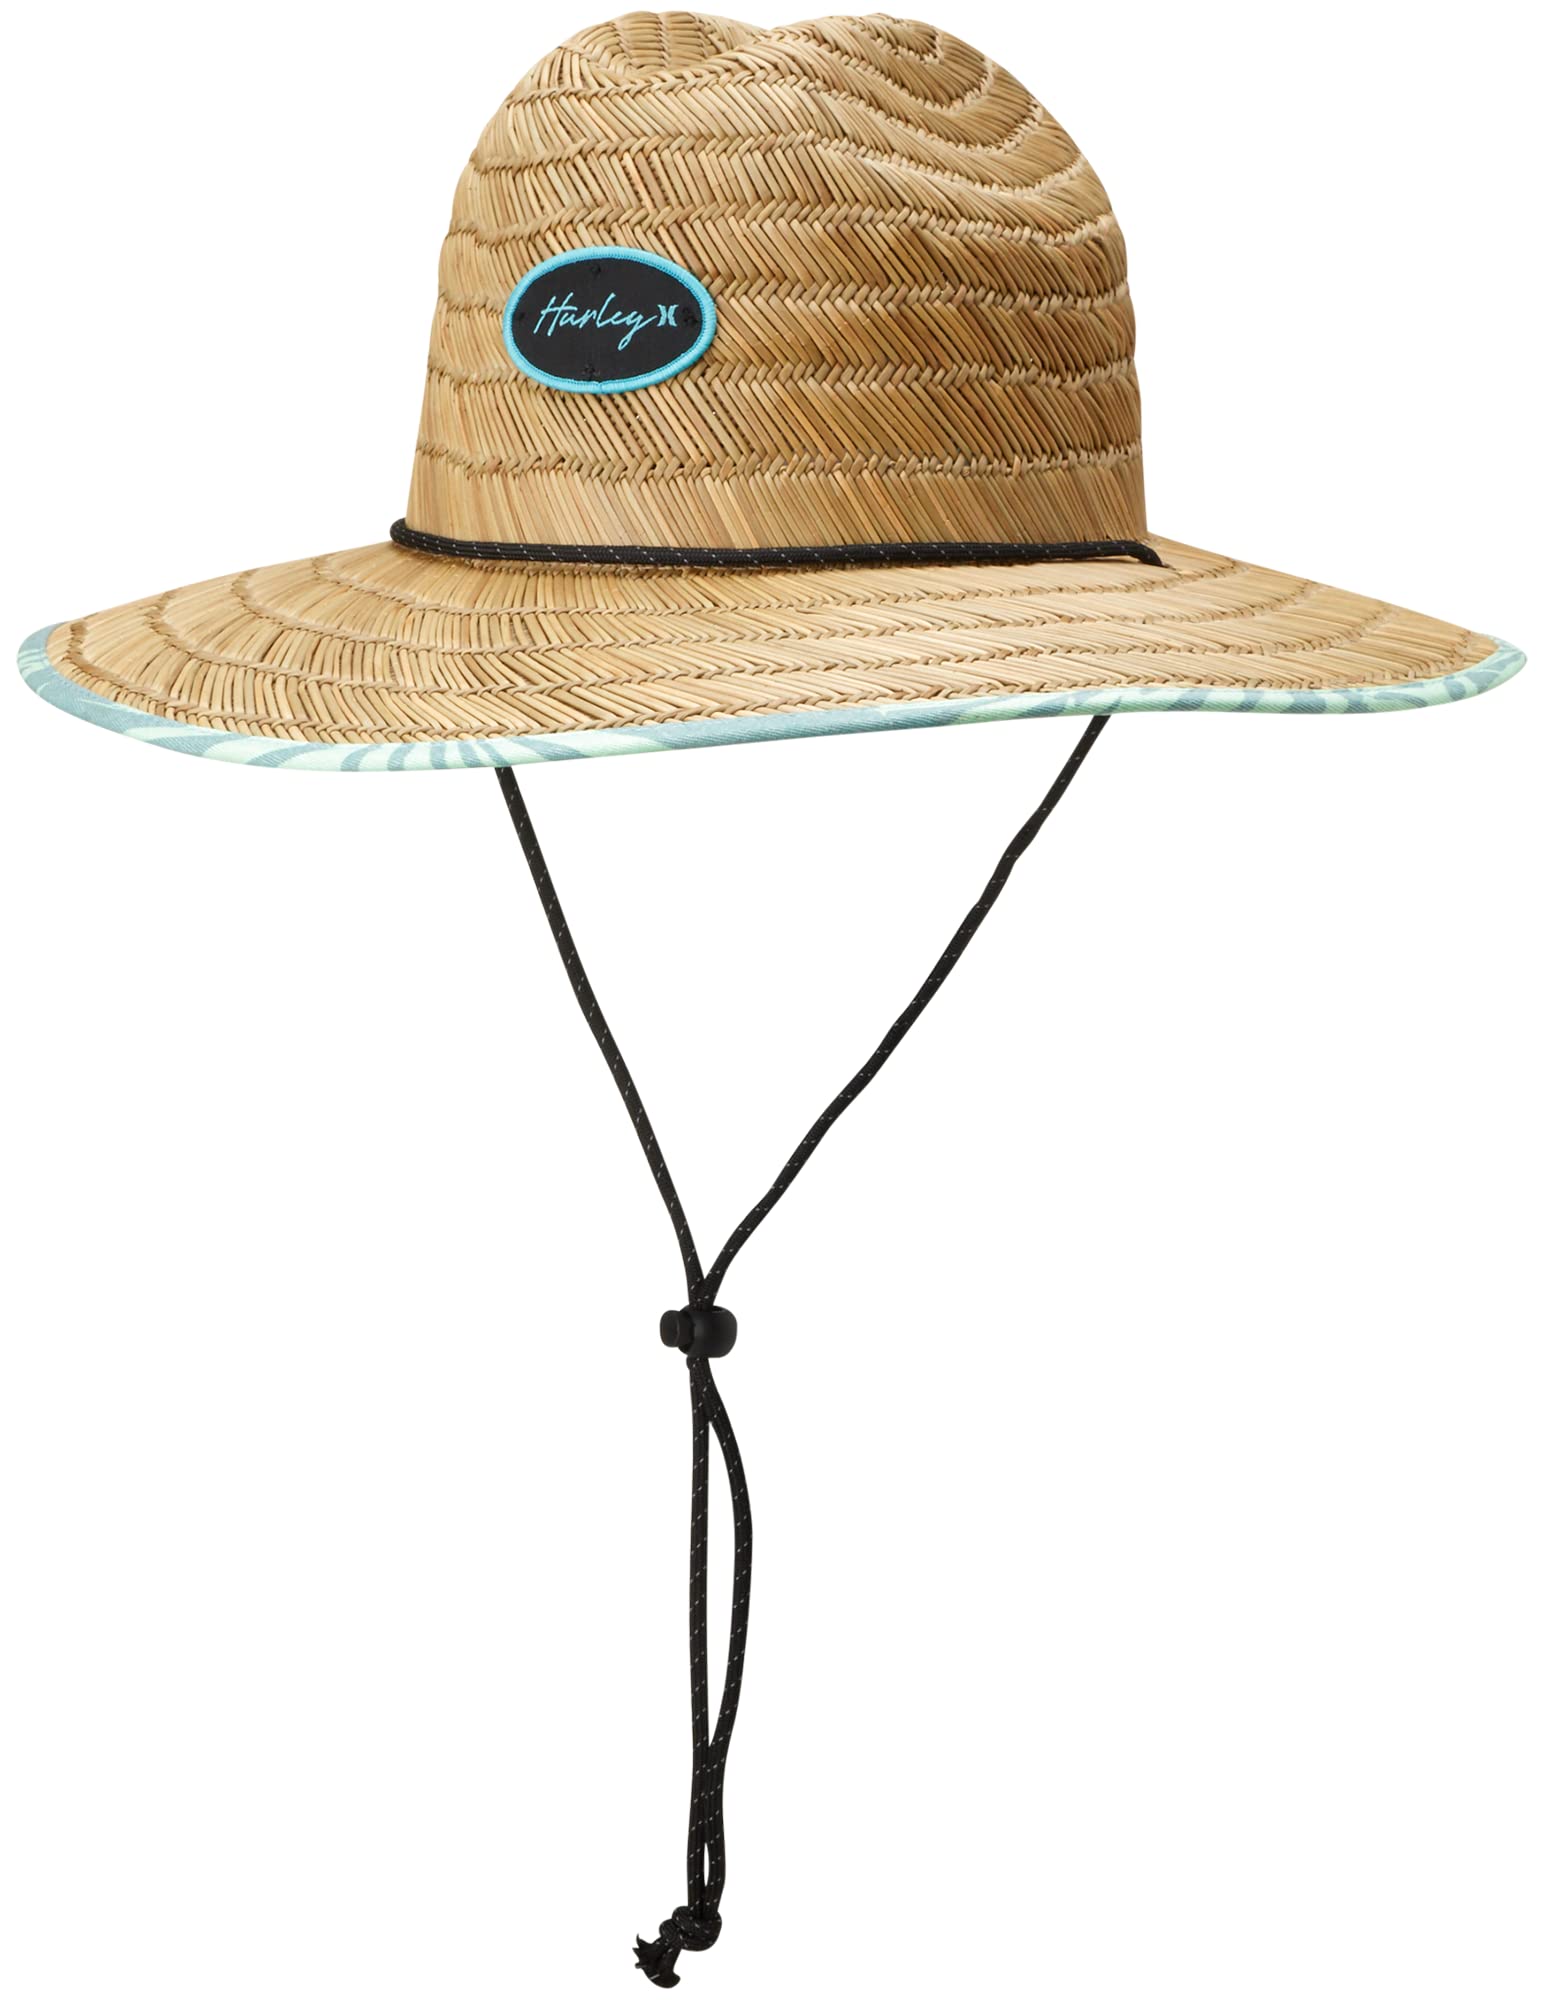 Hurley Women's Straw Hat - Capri Medium Brim Real Straw Lifeguard Sun Hat with Chin Strap